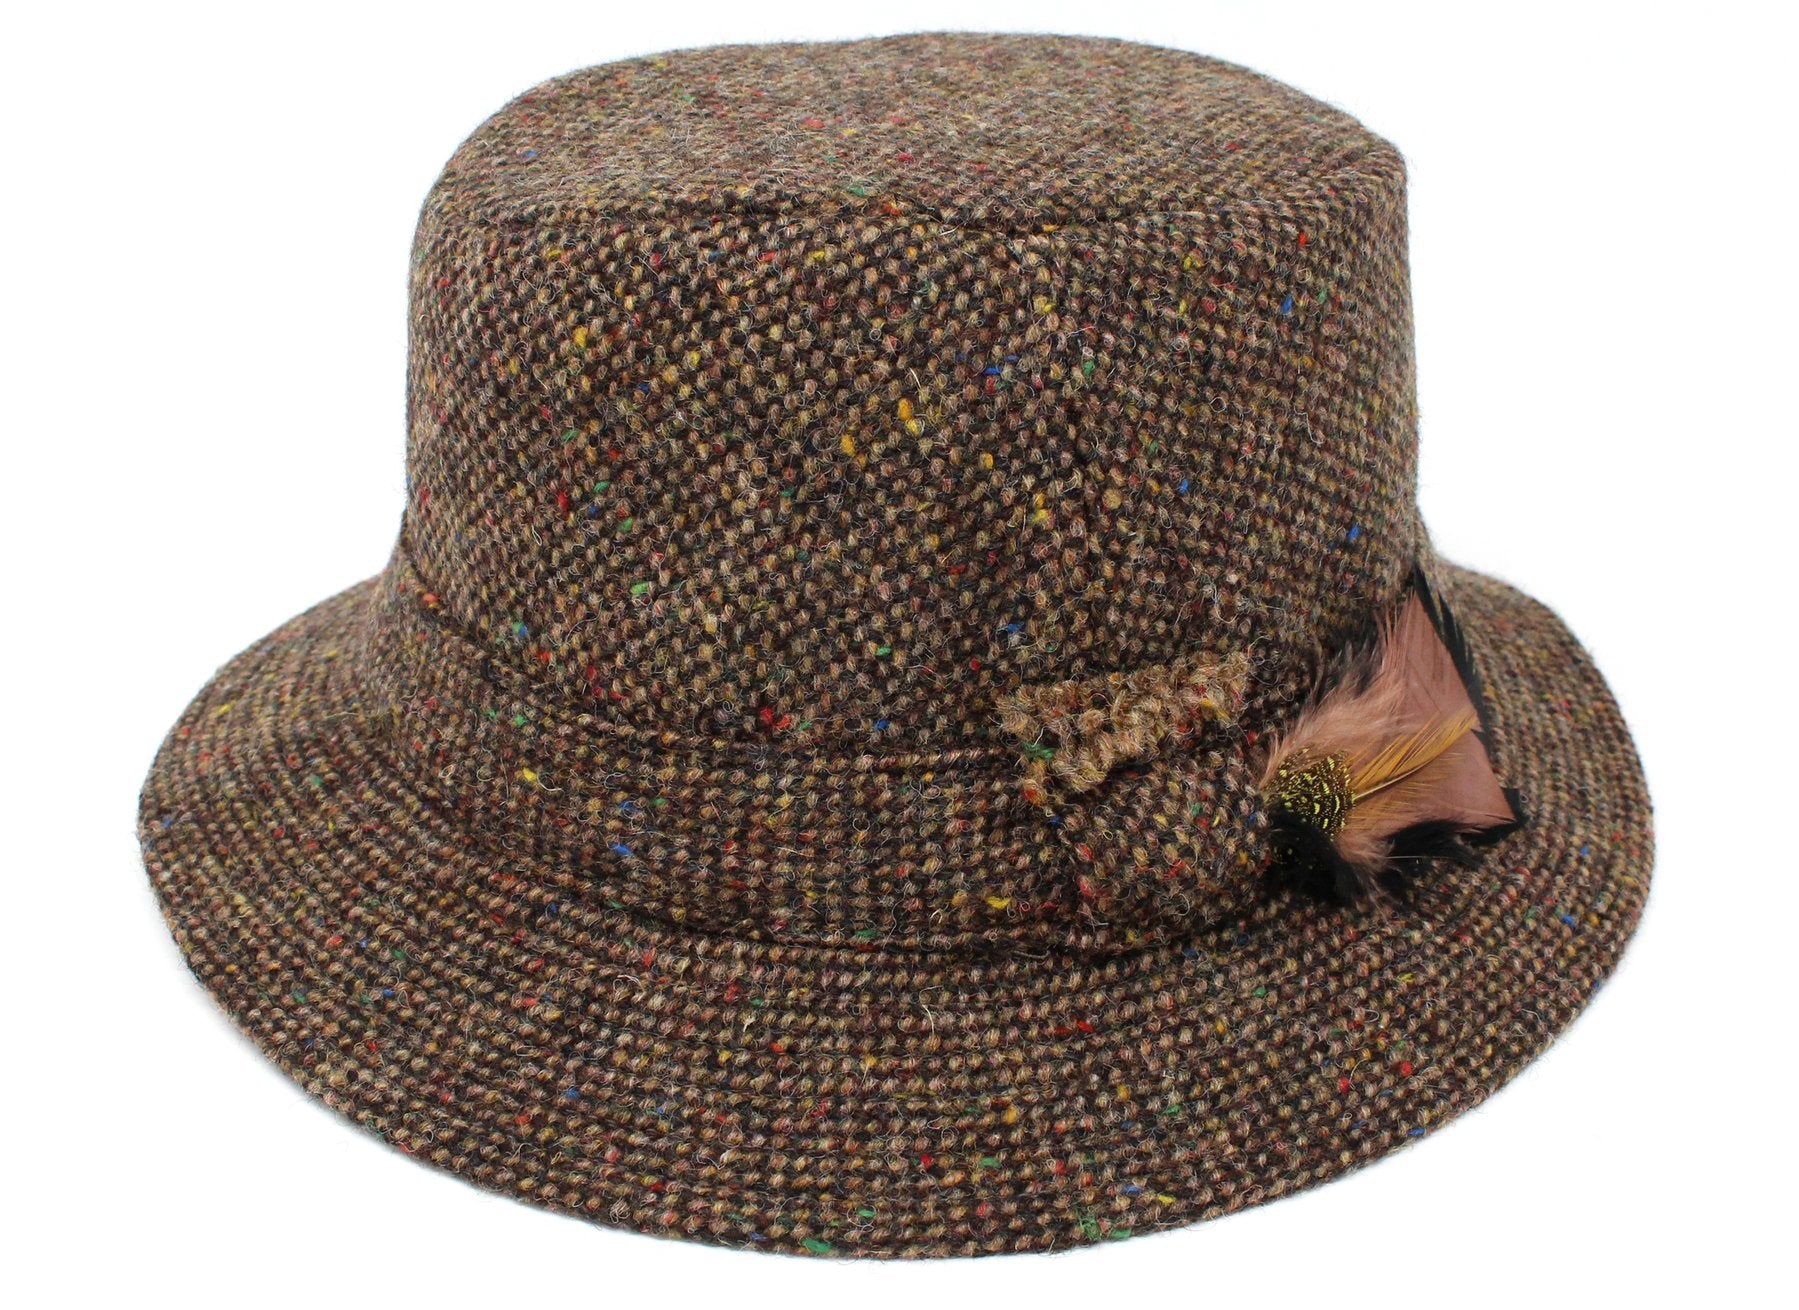 Irish Walking Hat - Tweed